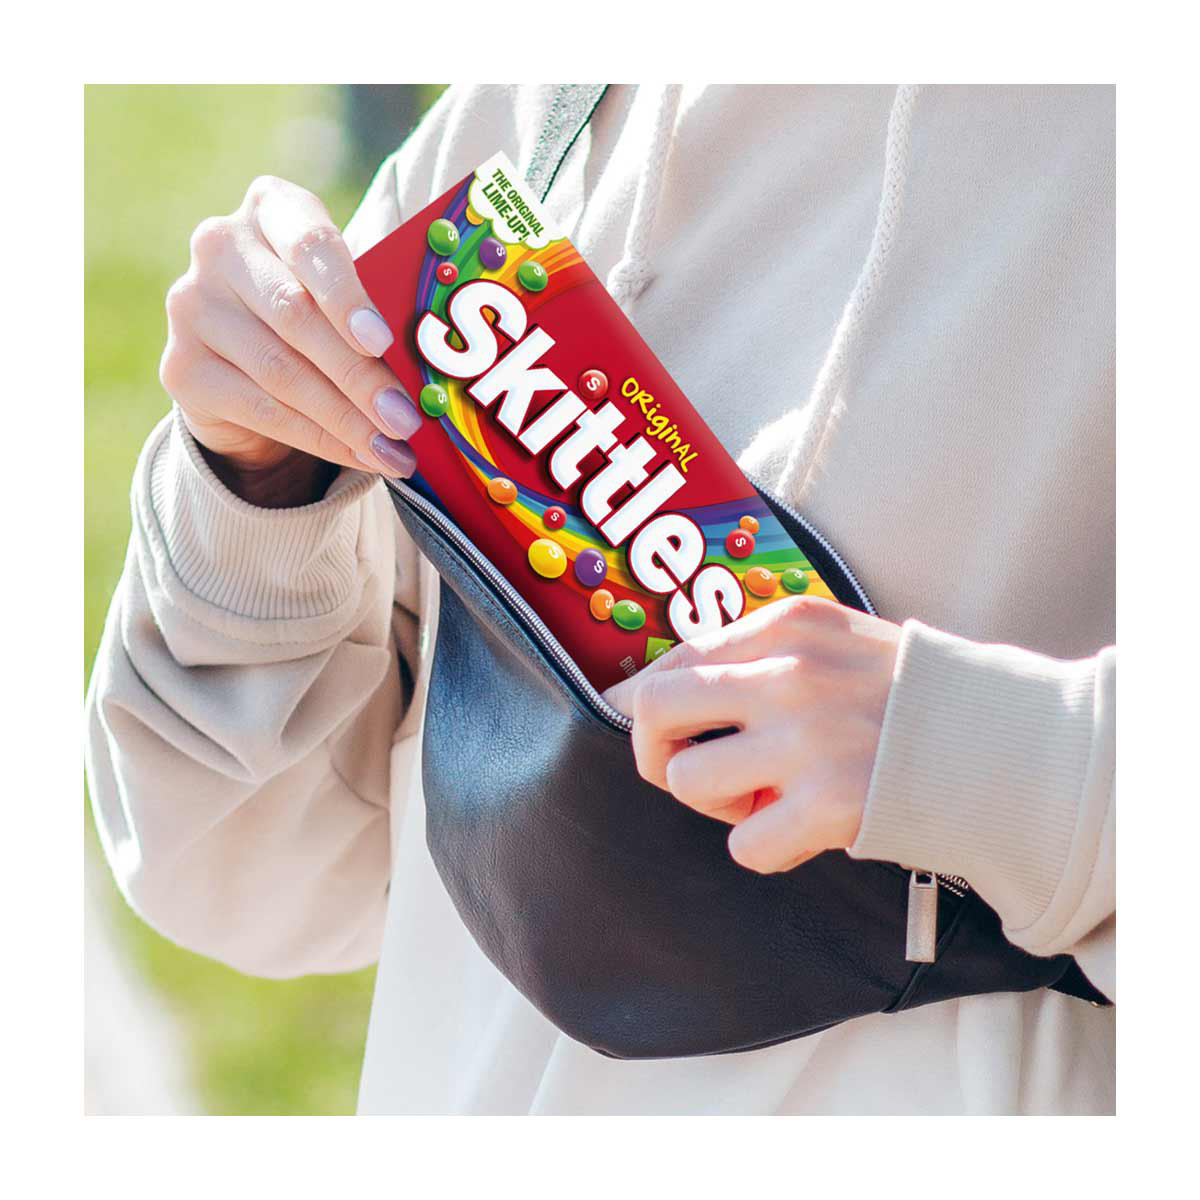 Skittles Original Candy Theater Box, 3.5 oz